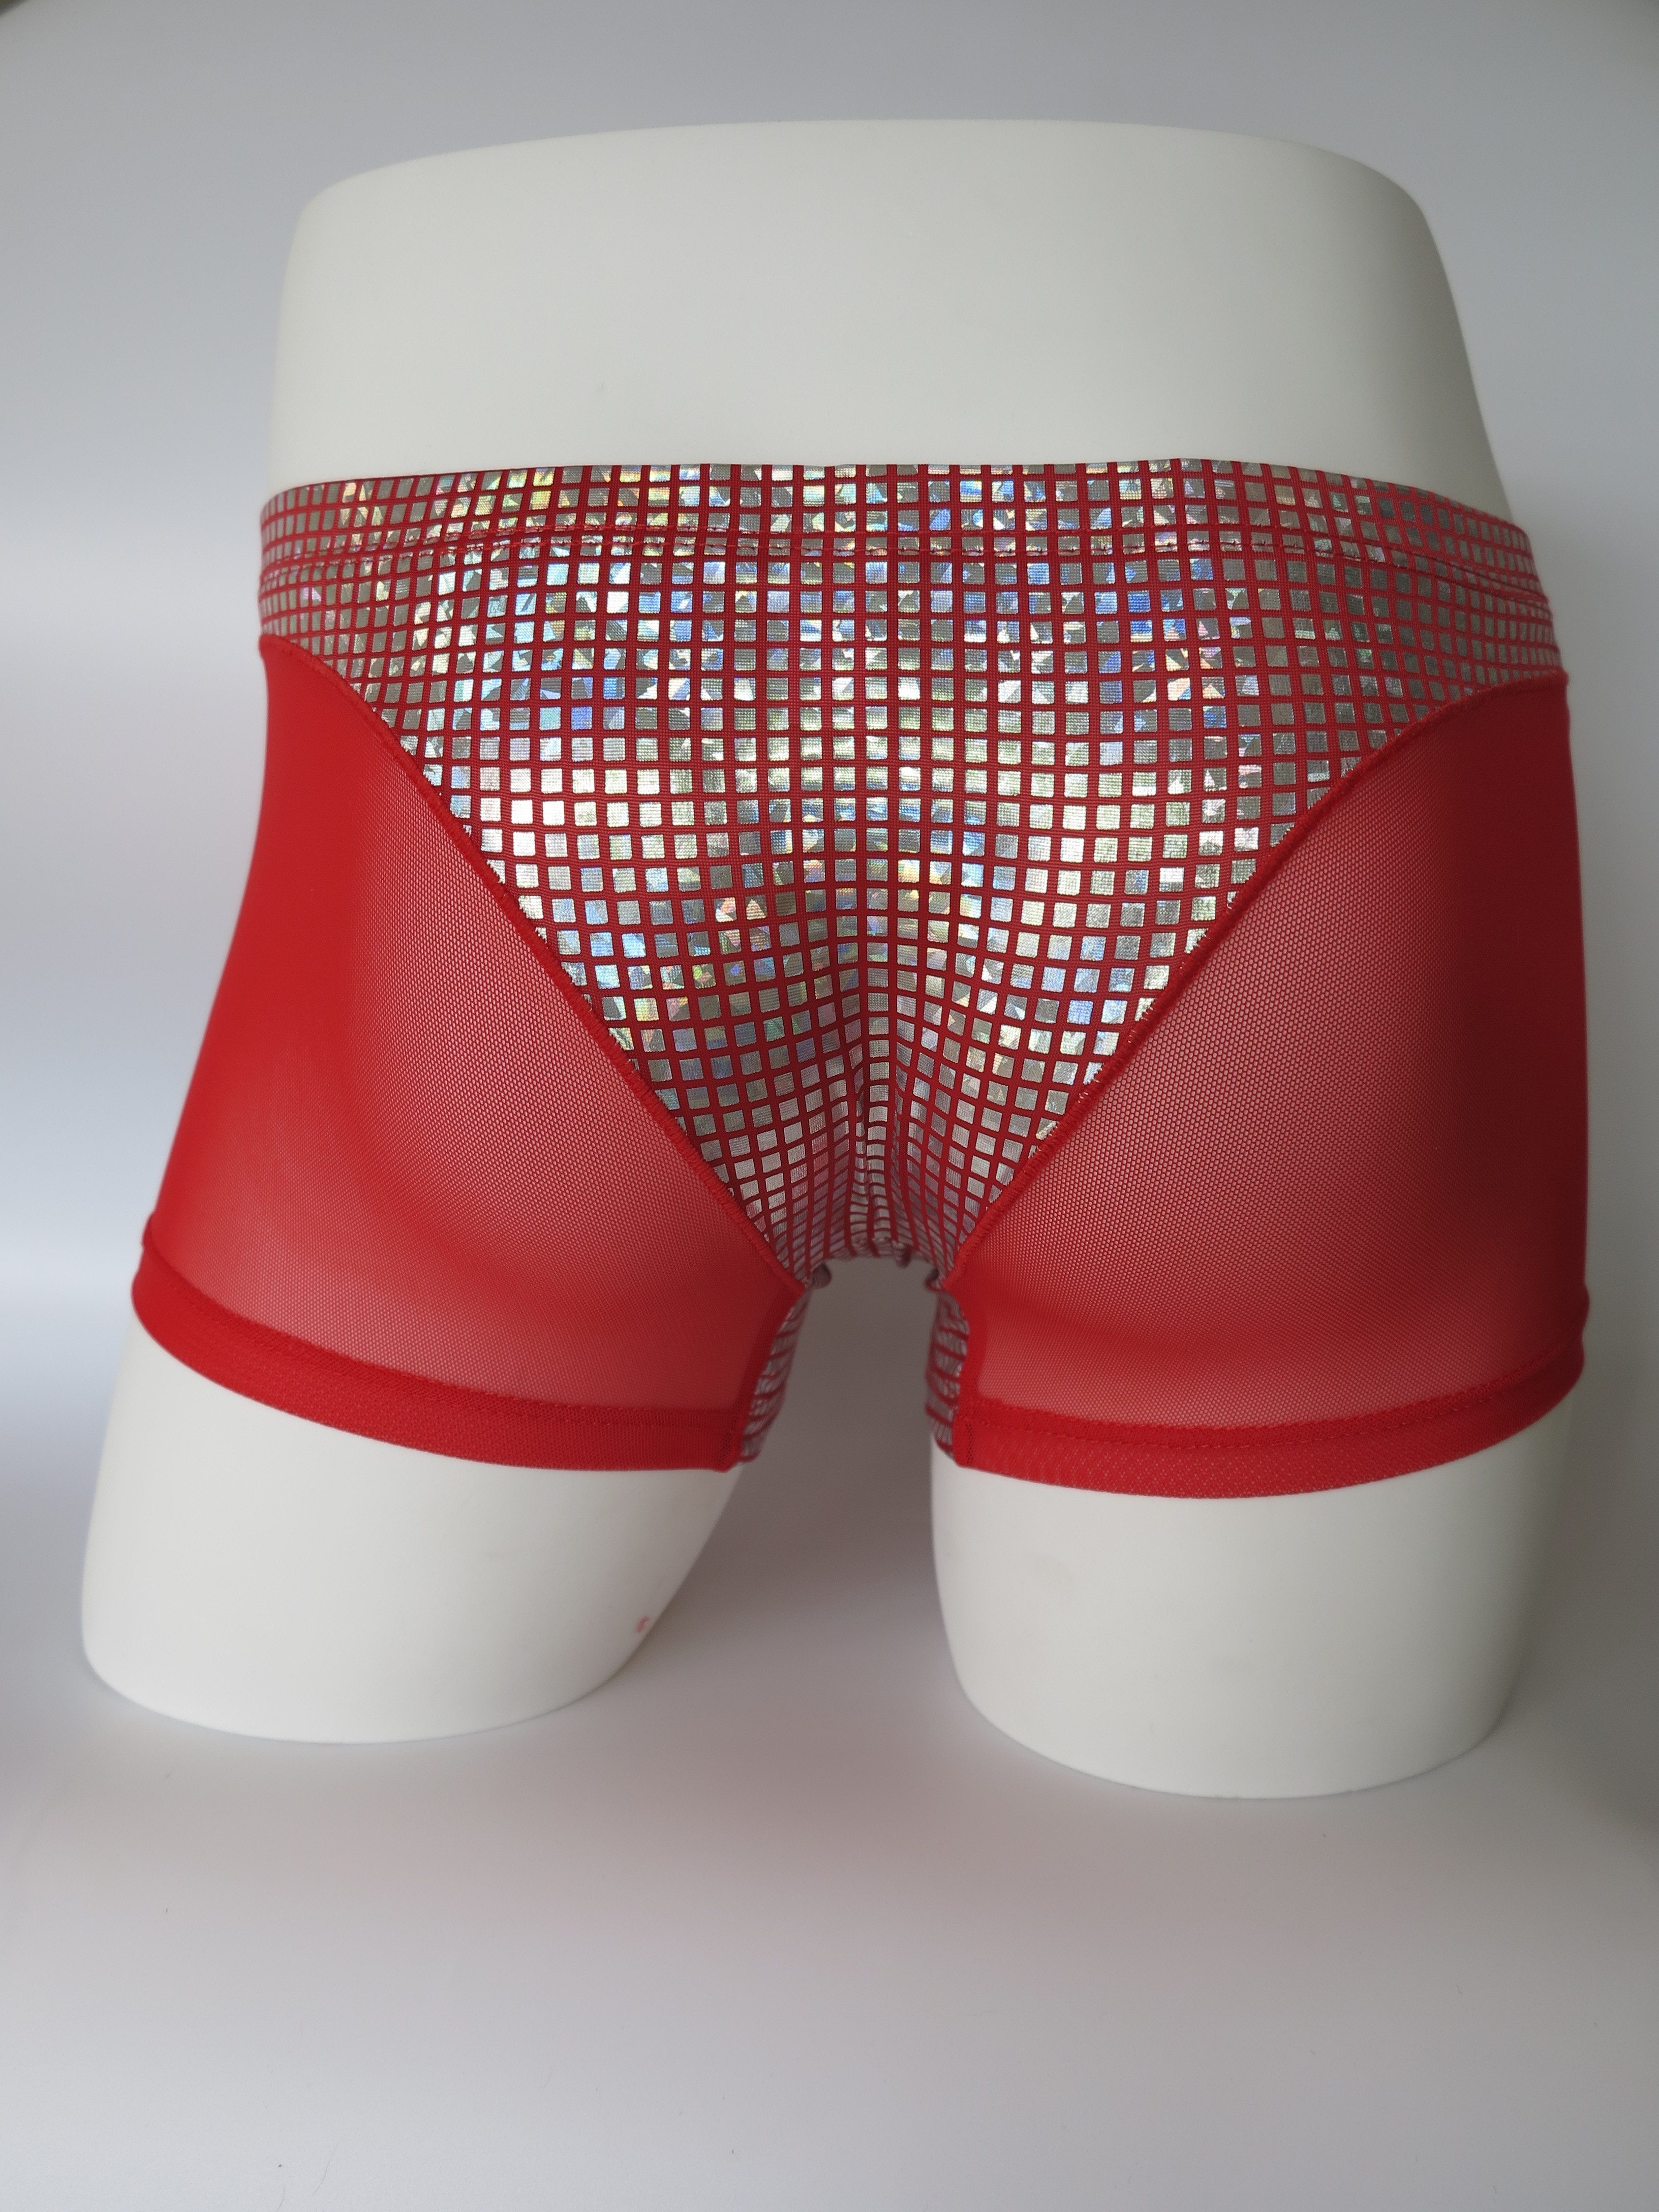 Men Letter Printed Underpant Sexy Mesh Boxer Briefs Shorts Trunks Soft  Underwear